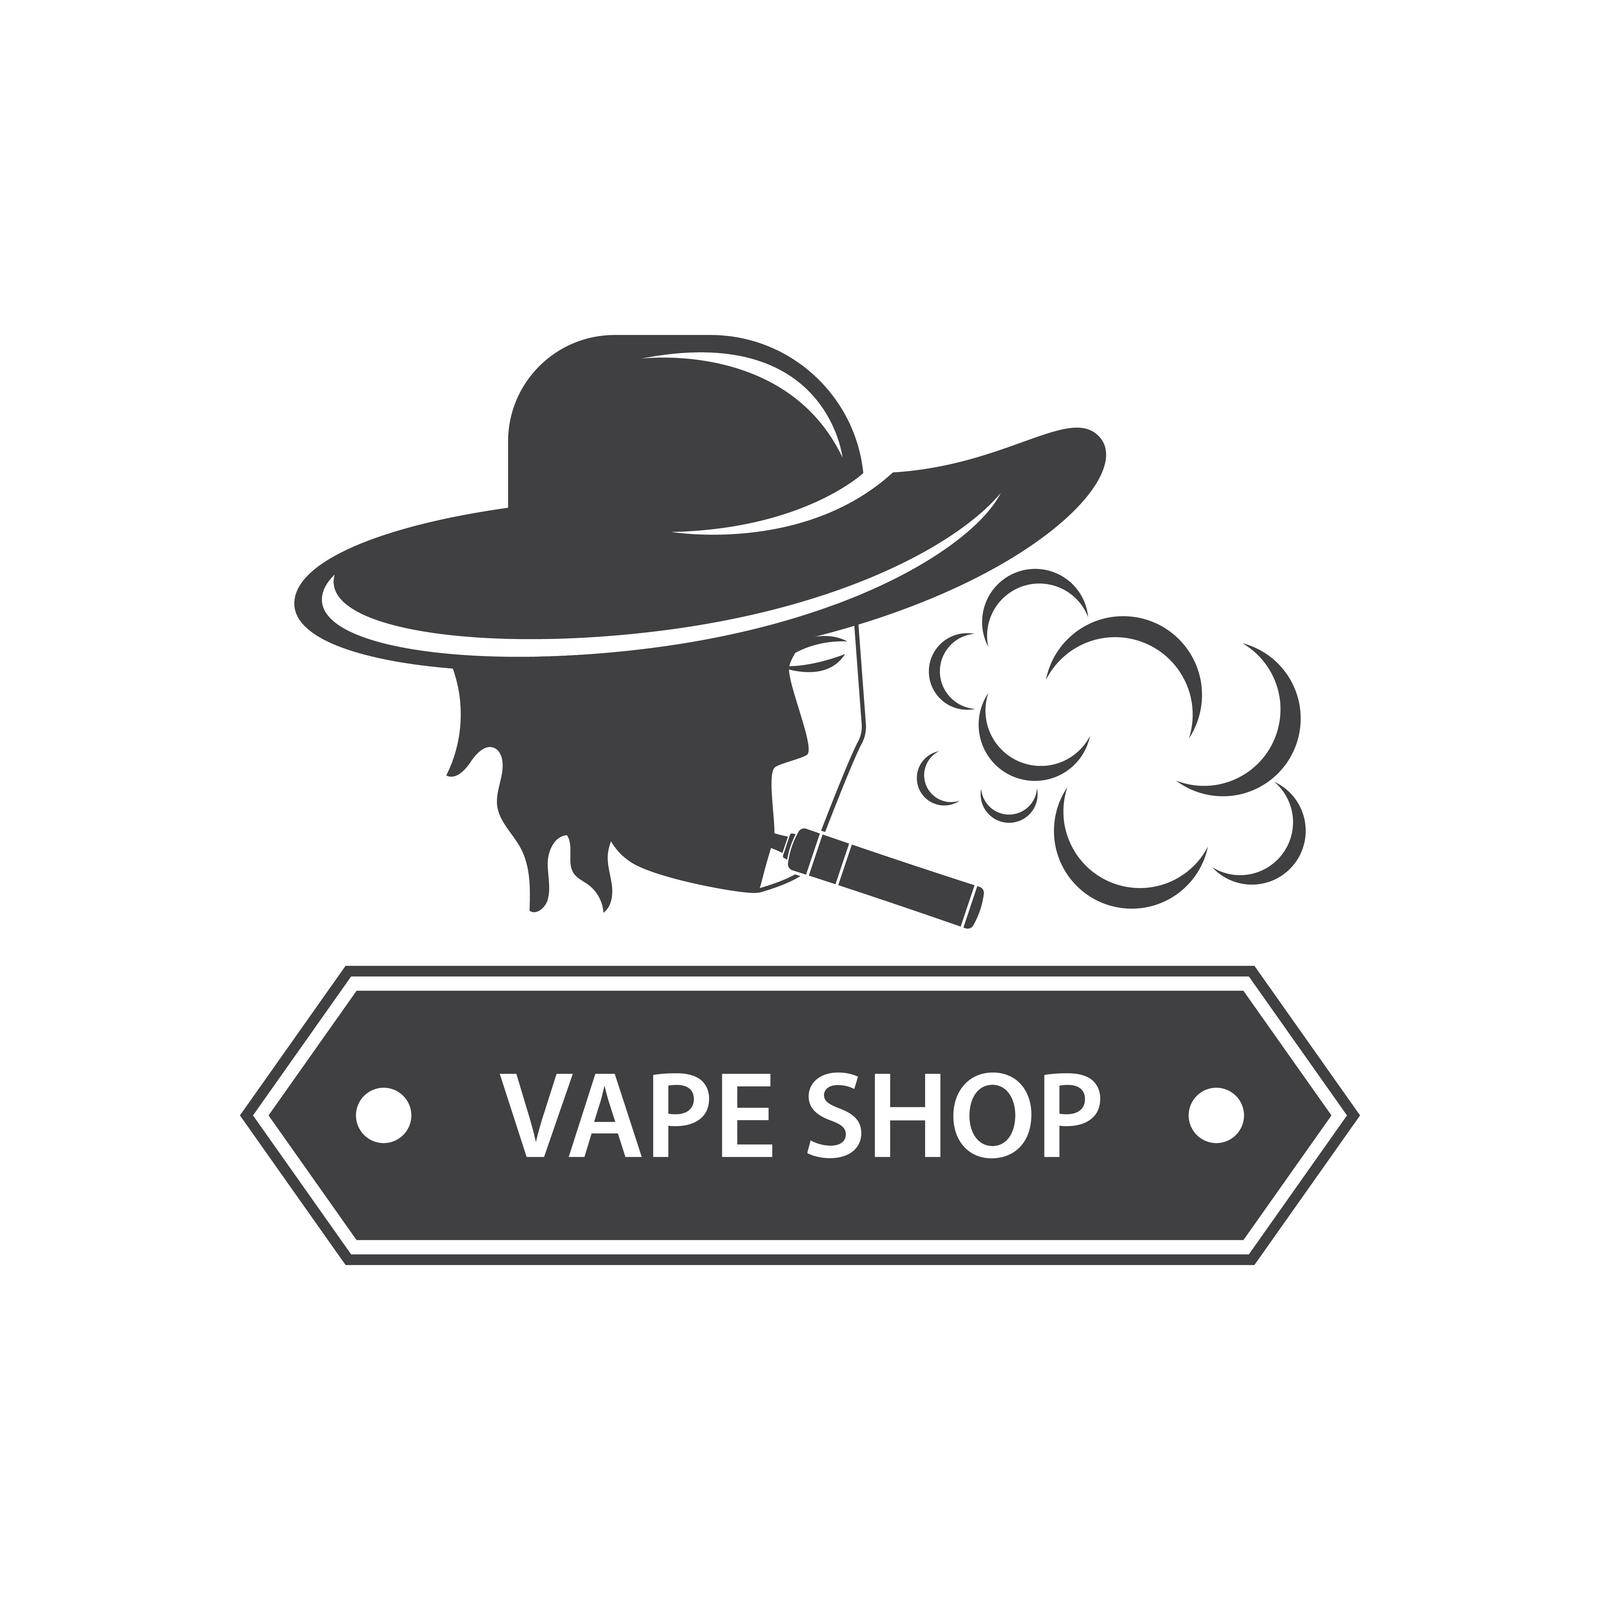 Vapor or vape logo by awk